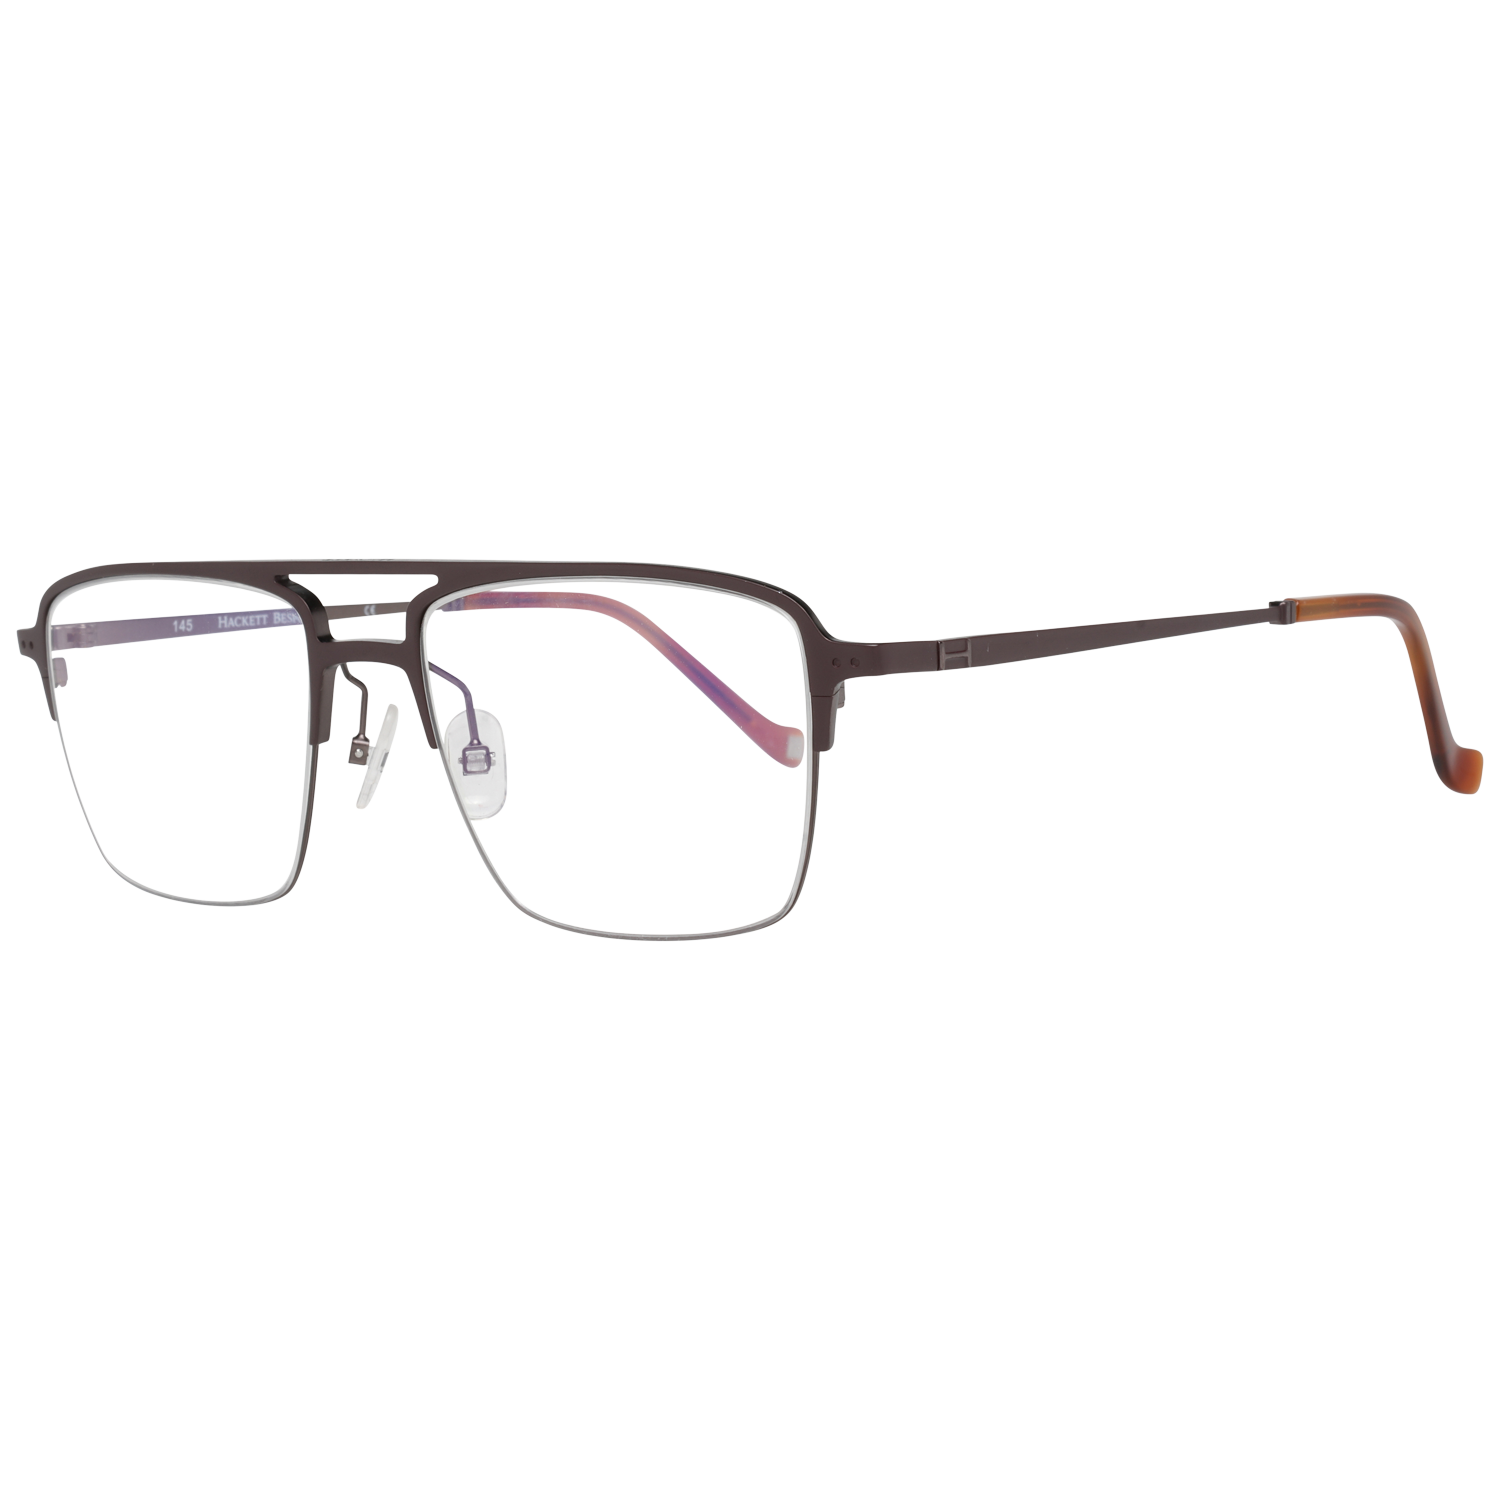 Hackett Frames Hackett Bespoke Glasses Optical Frame HEB243 175 54 Eyeglasses Eyewear UK USA Australia 